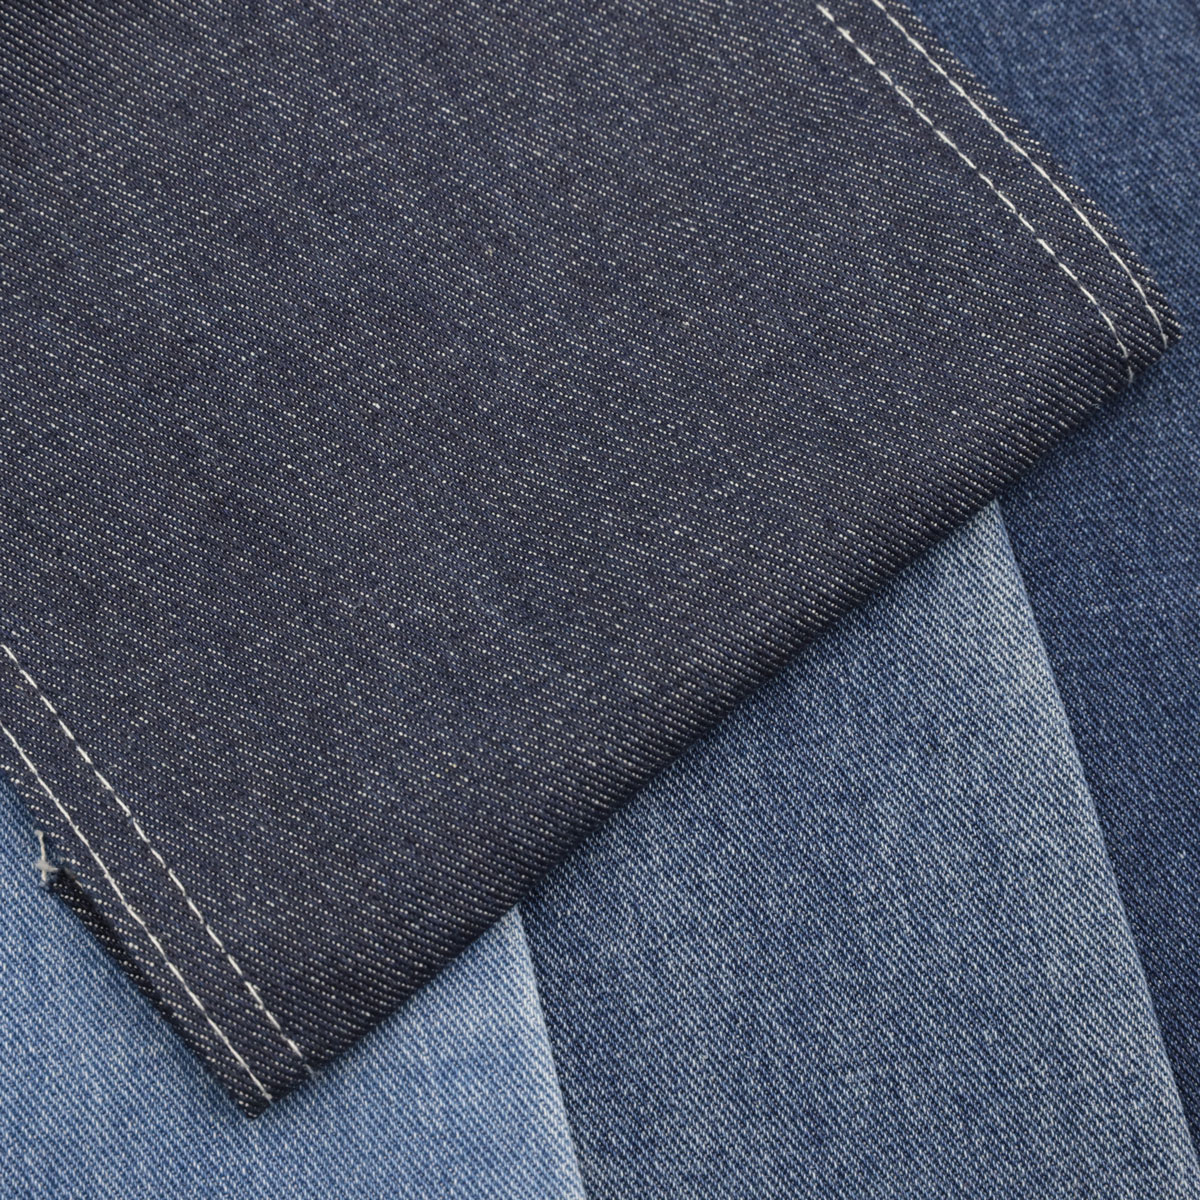 6 Cool Ways to Wear Non-Stretch Denim Fabric 1